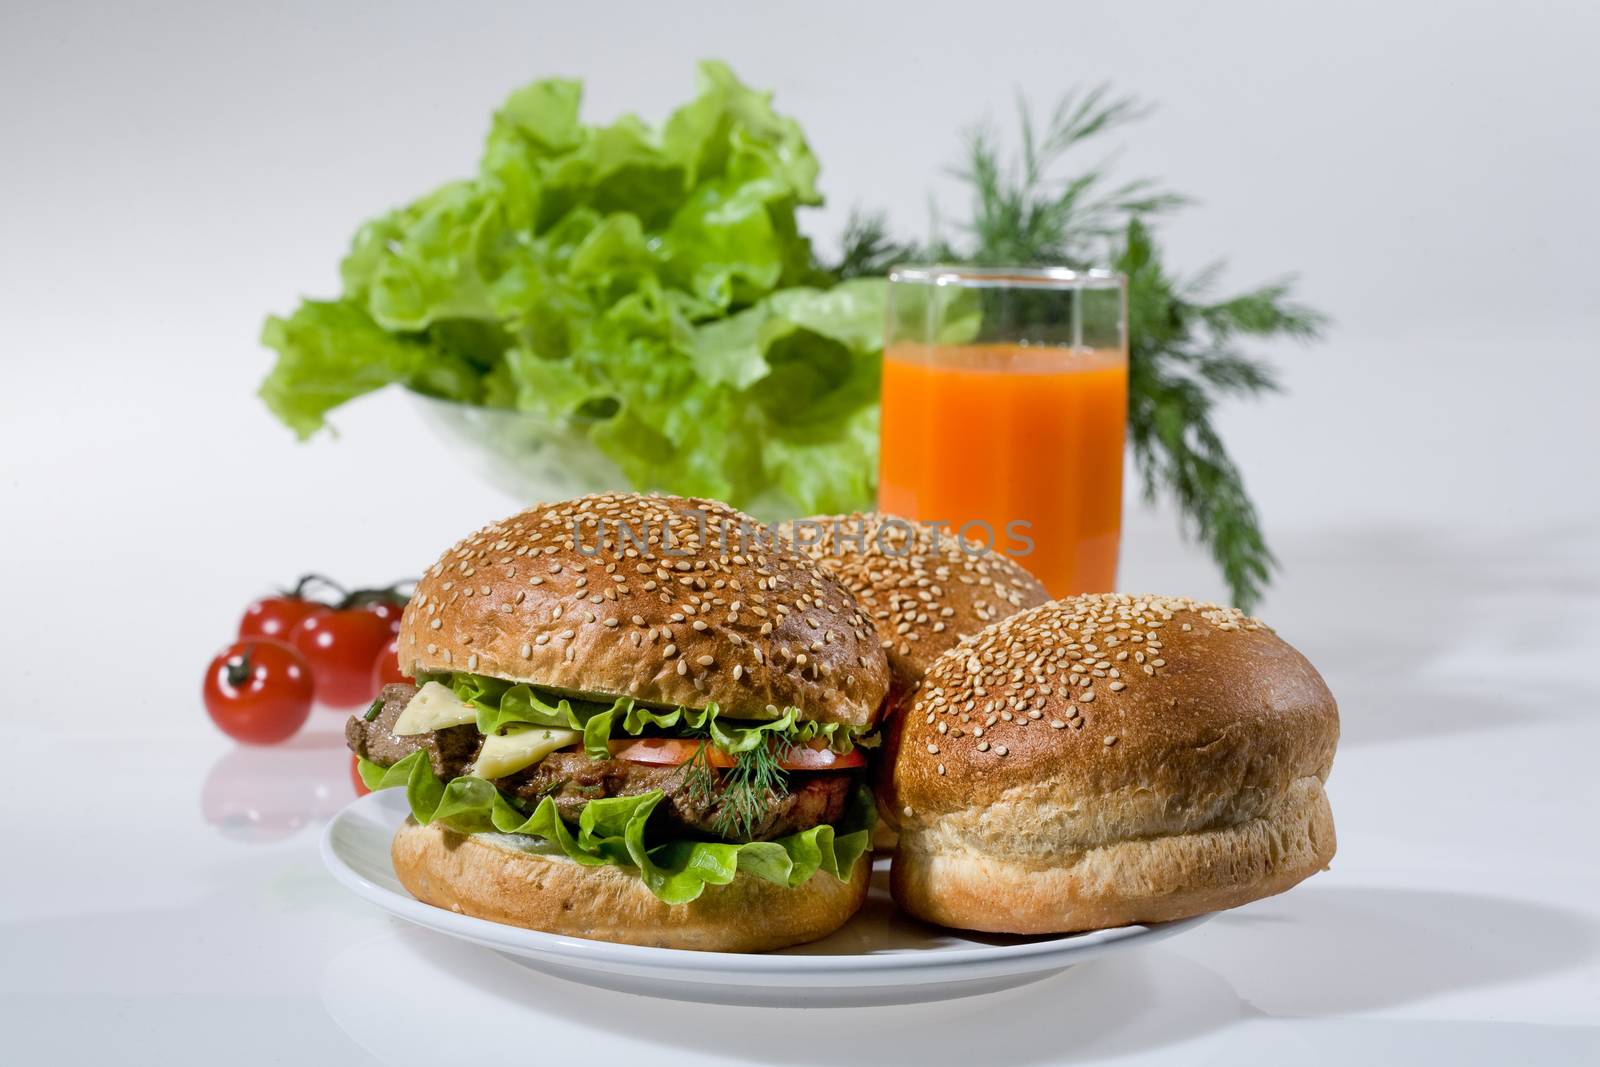 Burgers And Juice by Fotoskat